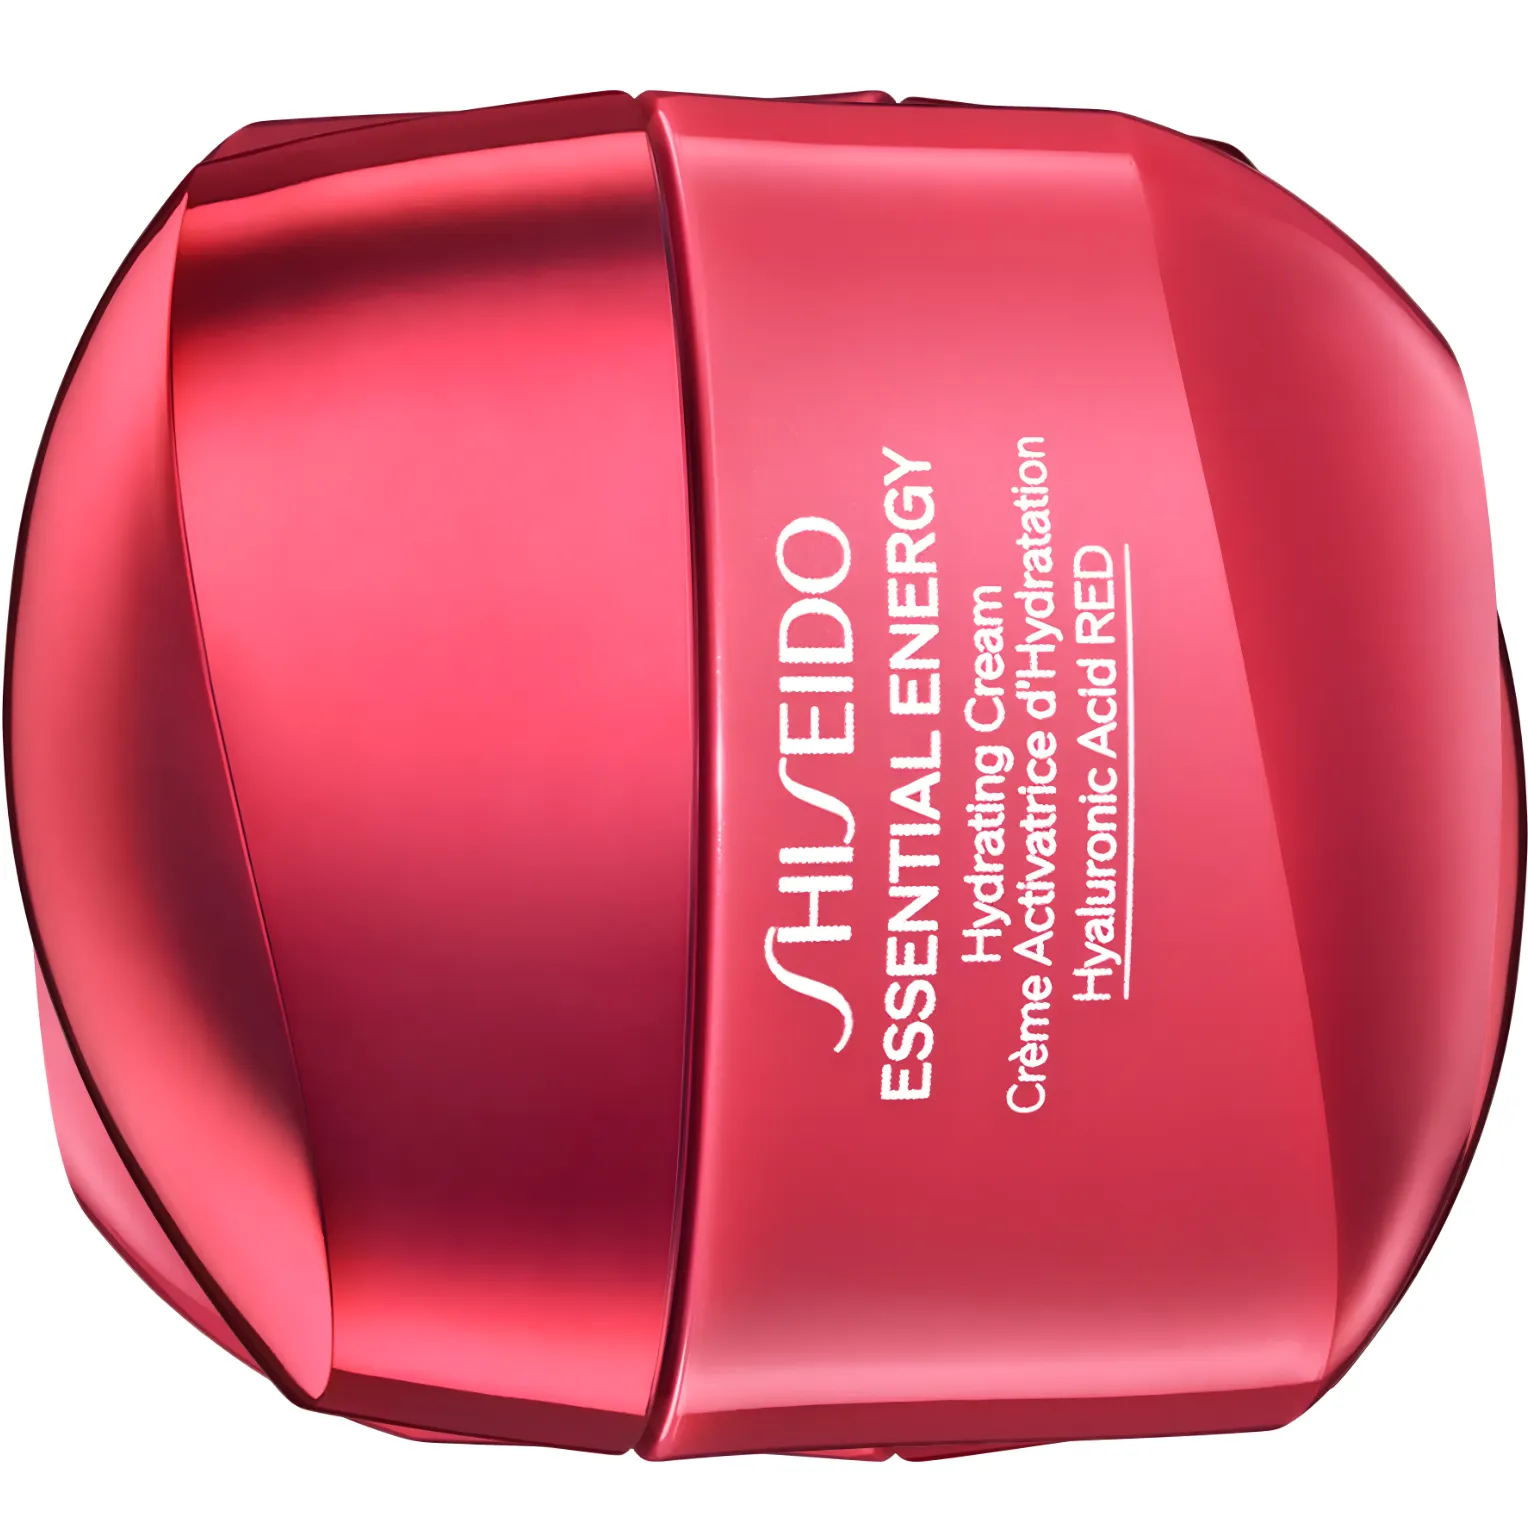 Free Shiseido Skincare Product Samples